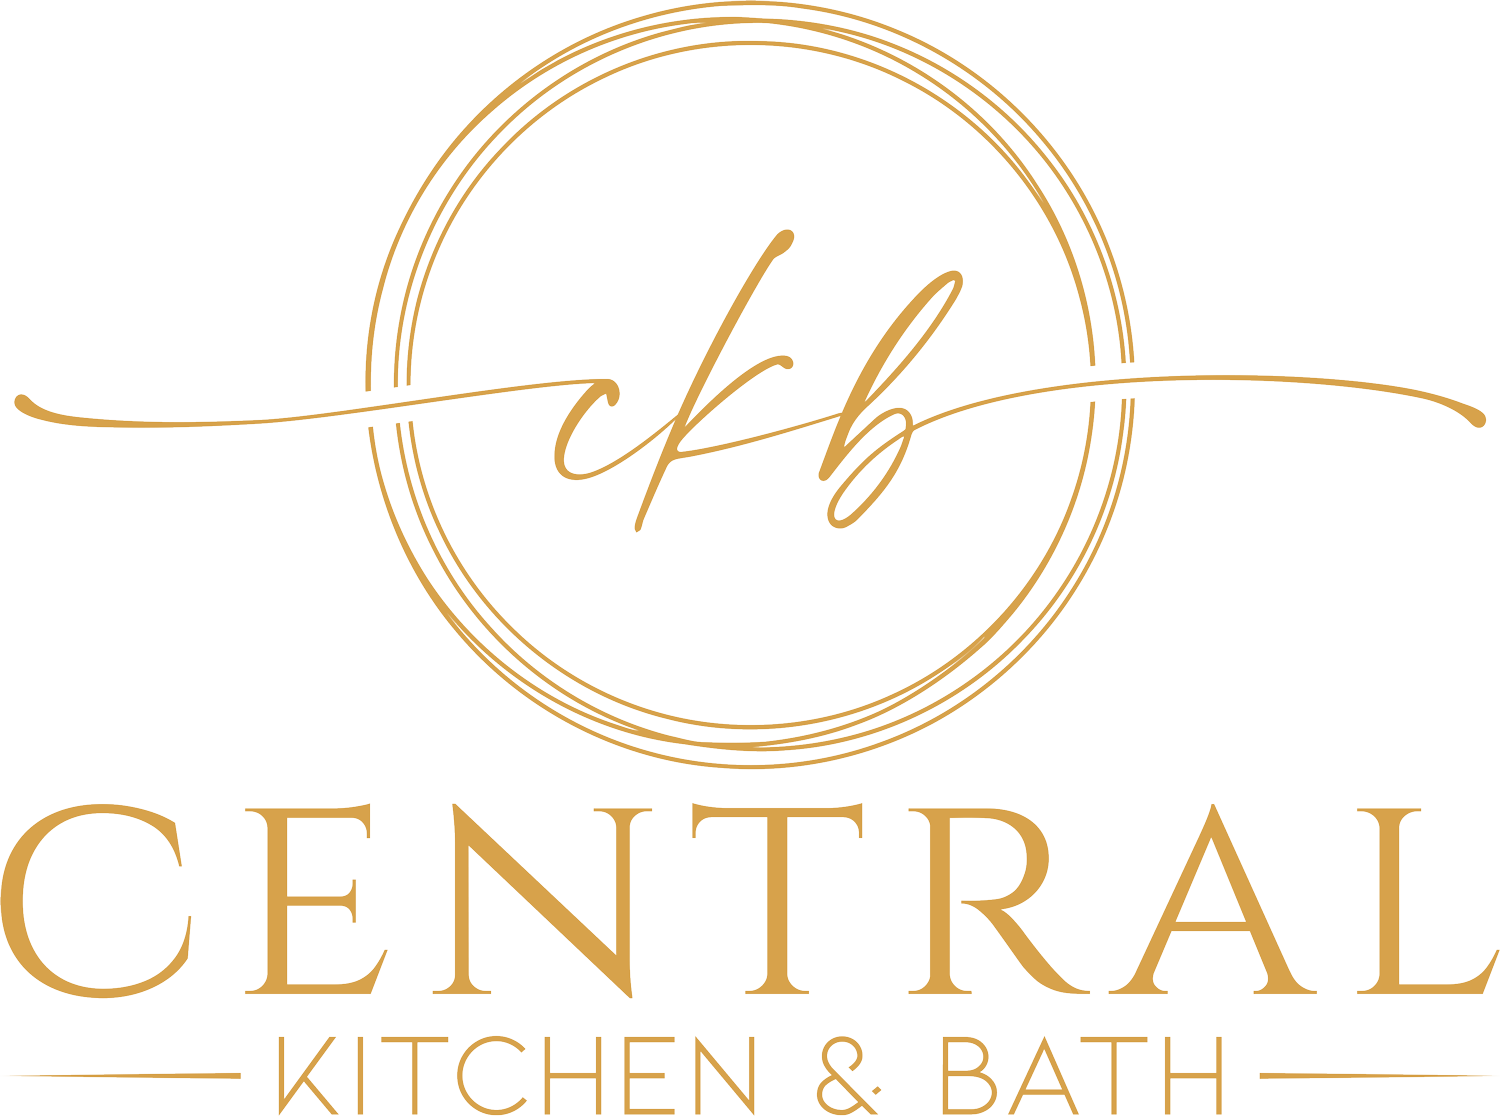 Elevating Home Design: Central Kitchen & Bath Unveils Exquisite Rebrand